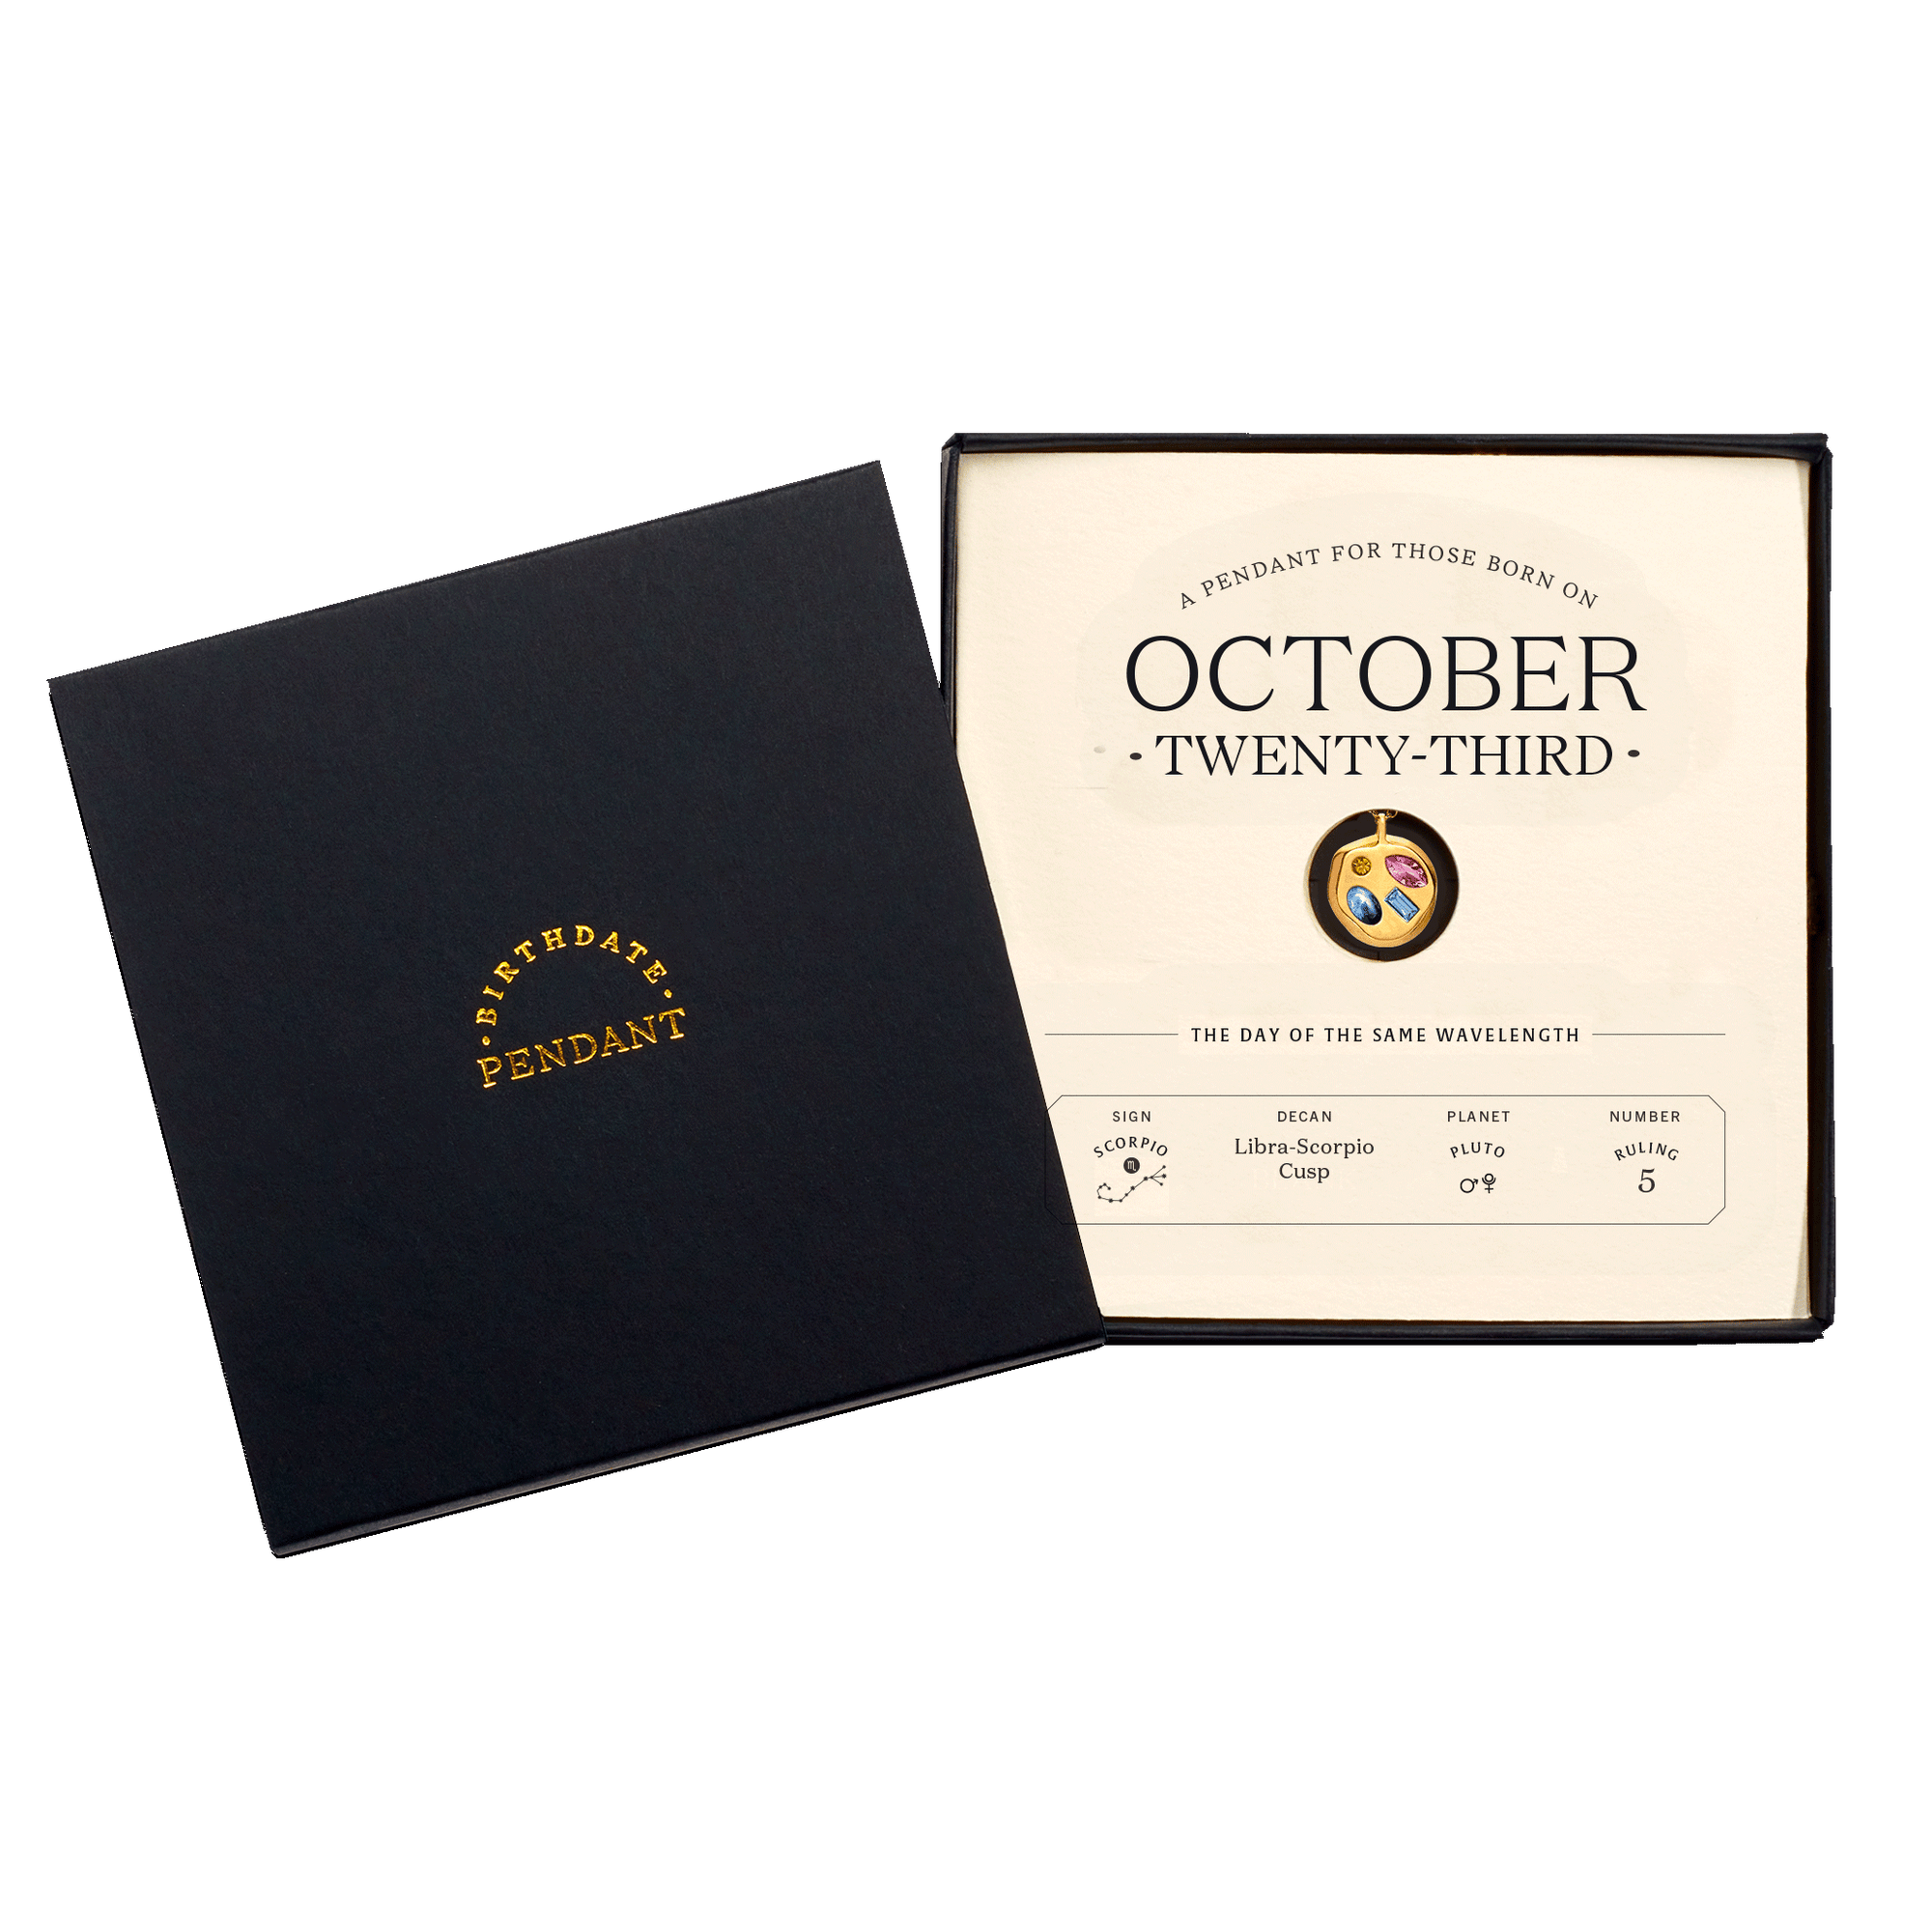 The October Twenty-Third Pendant inside its box